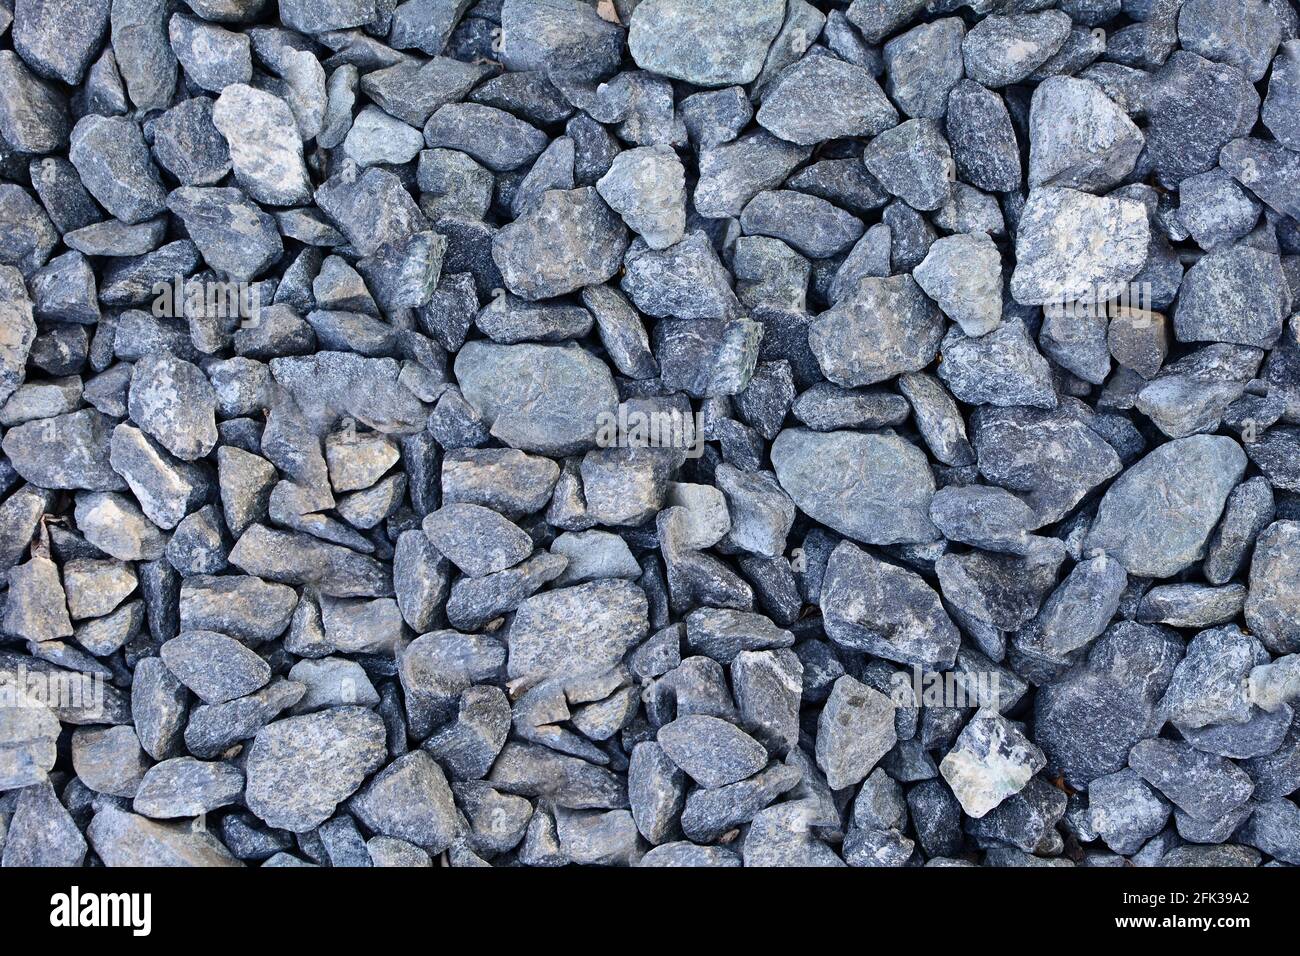 Background of gray gravel. Full frame gray gravel texture and pattern. Stock Photo